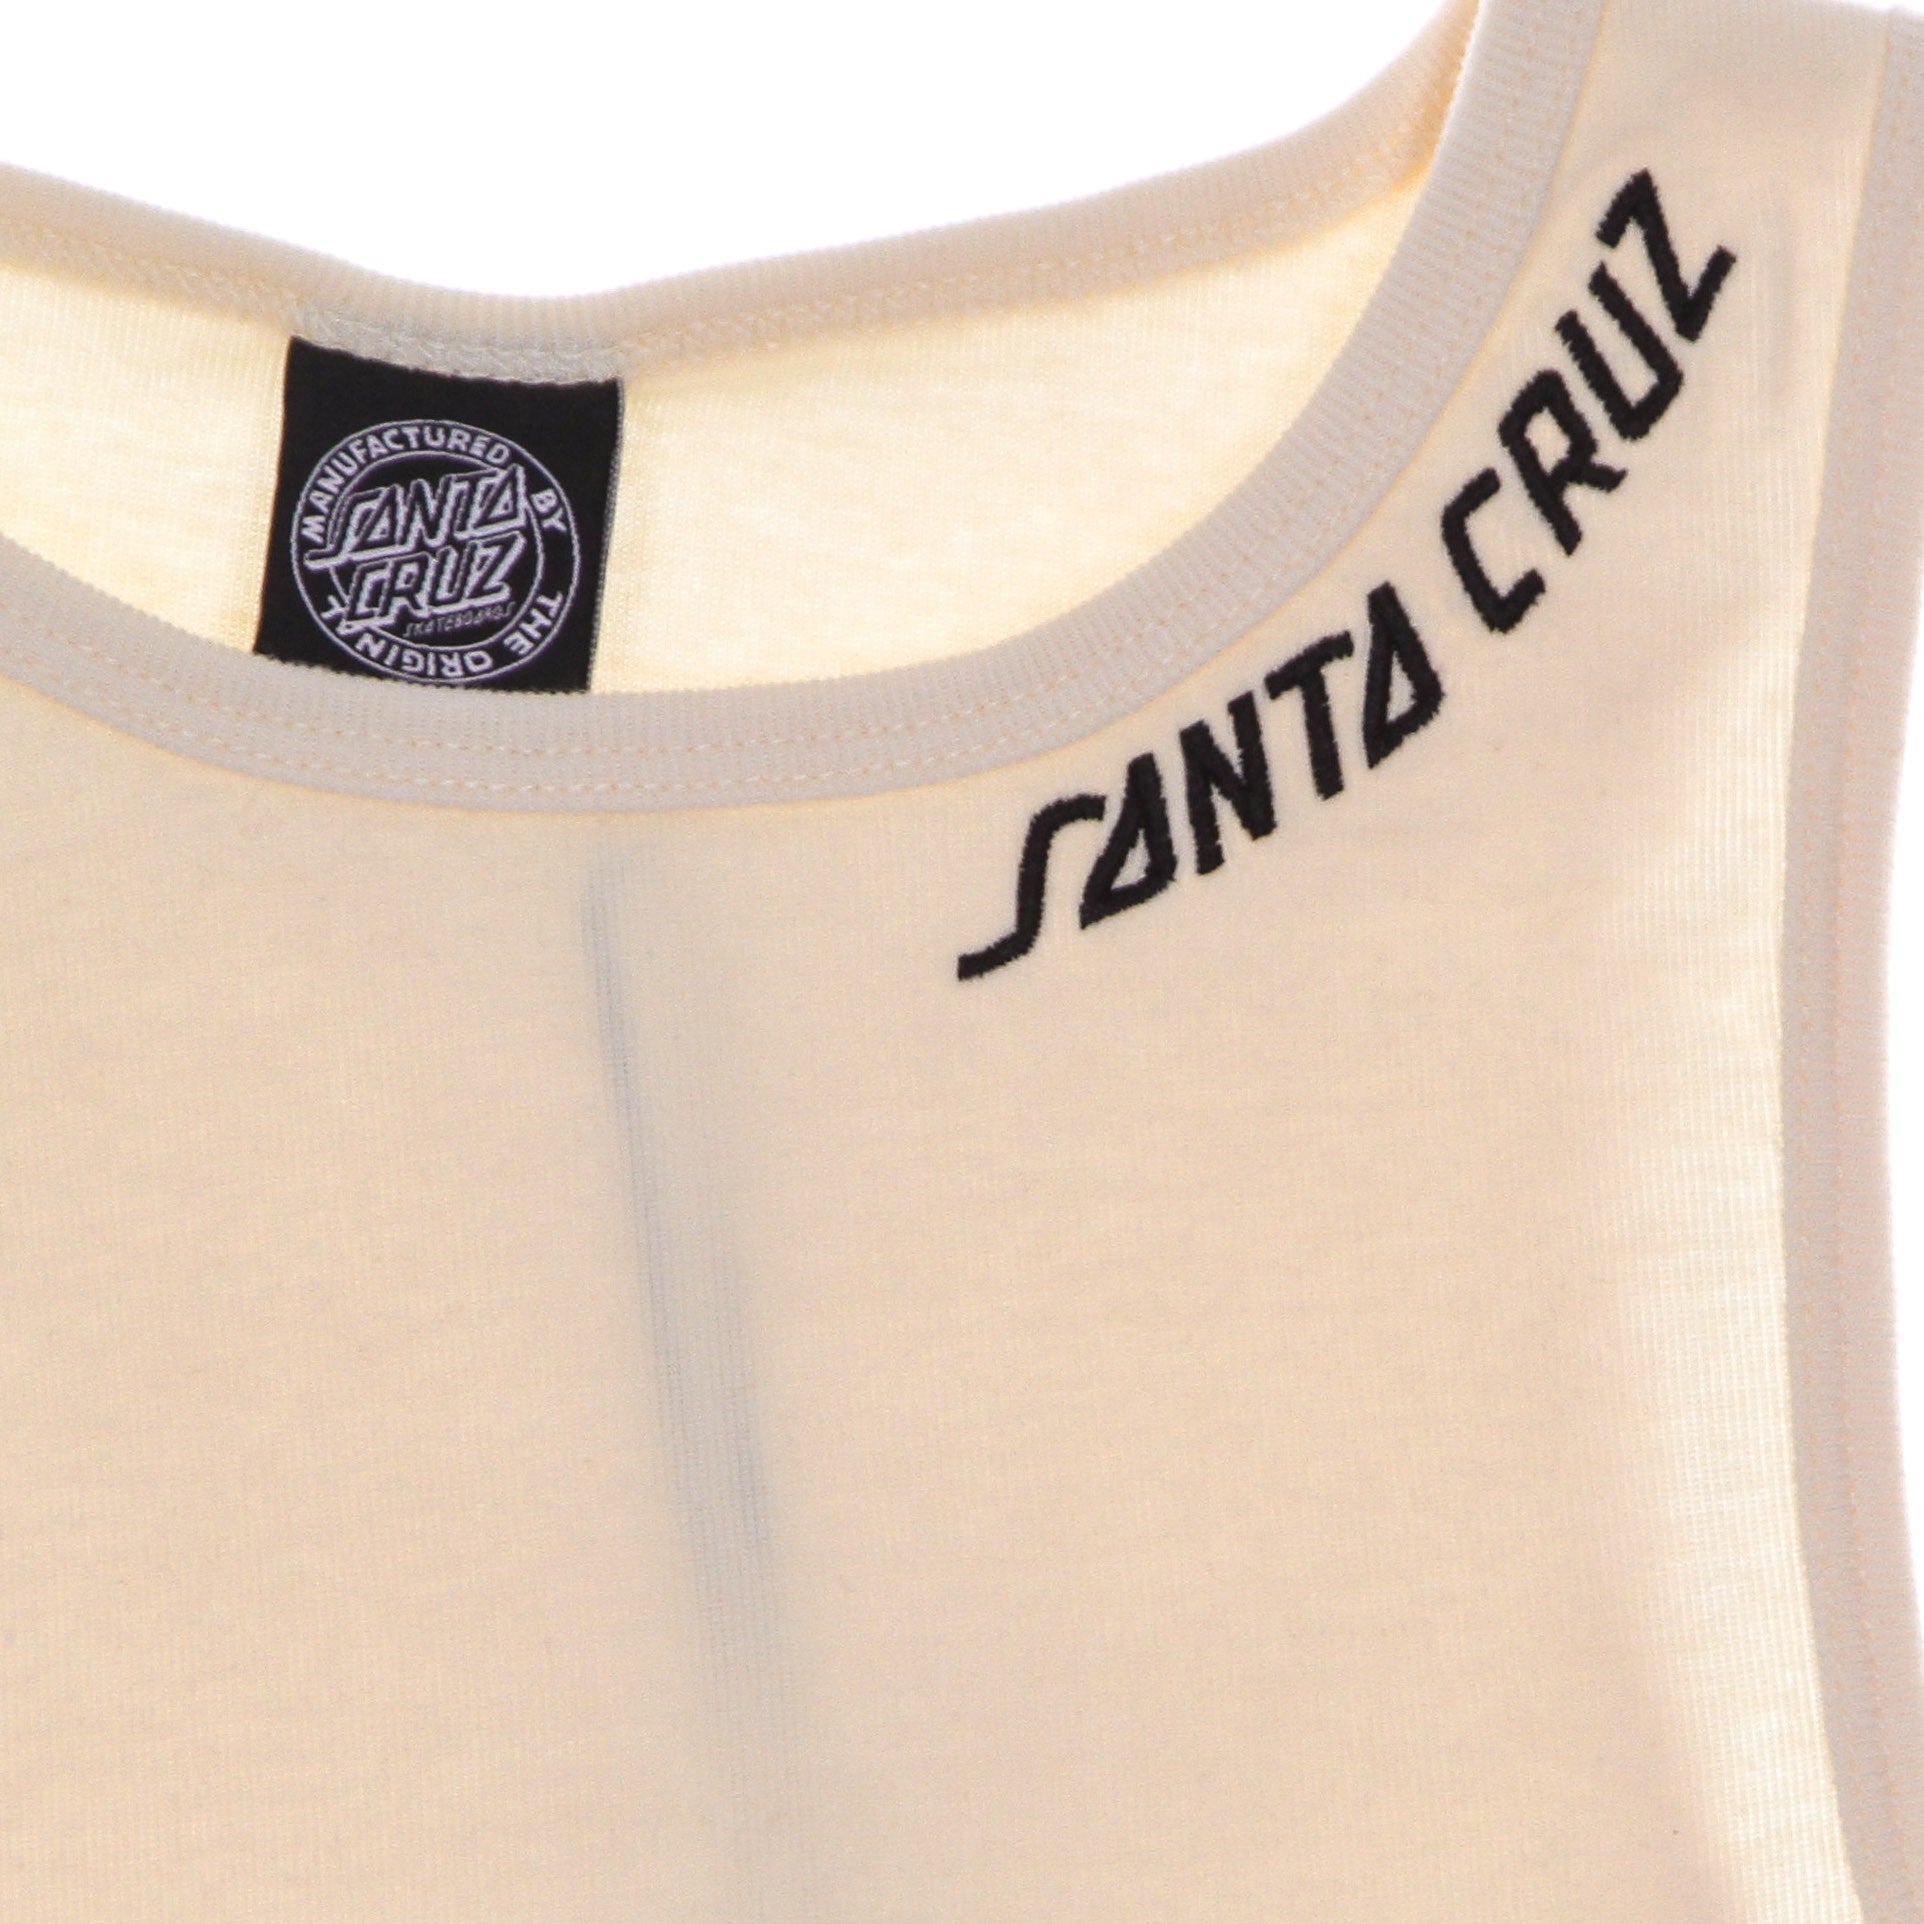 Santa Cruz, Canotta Corta Donna Strip Tank Vest, 